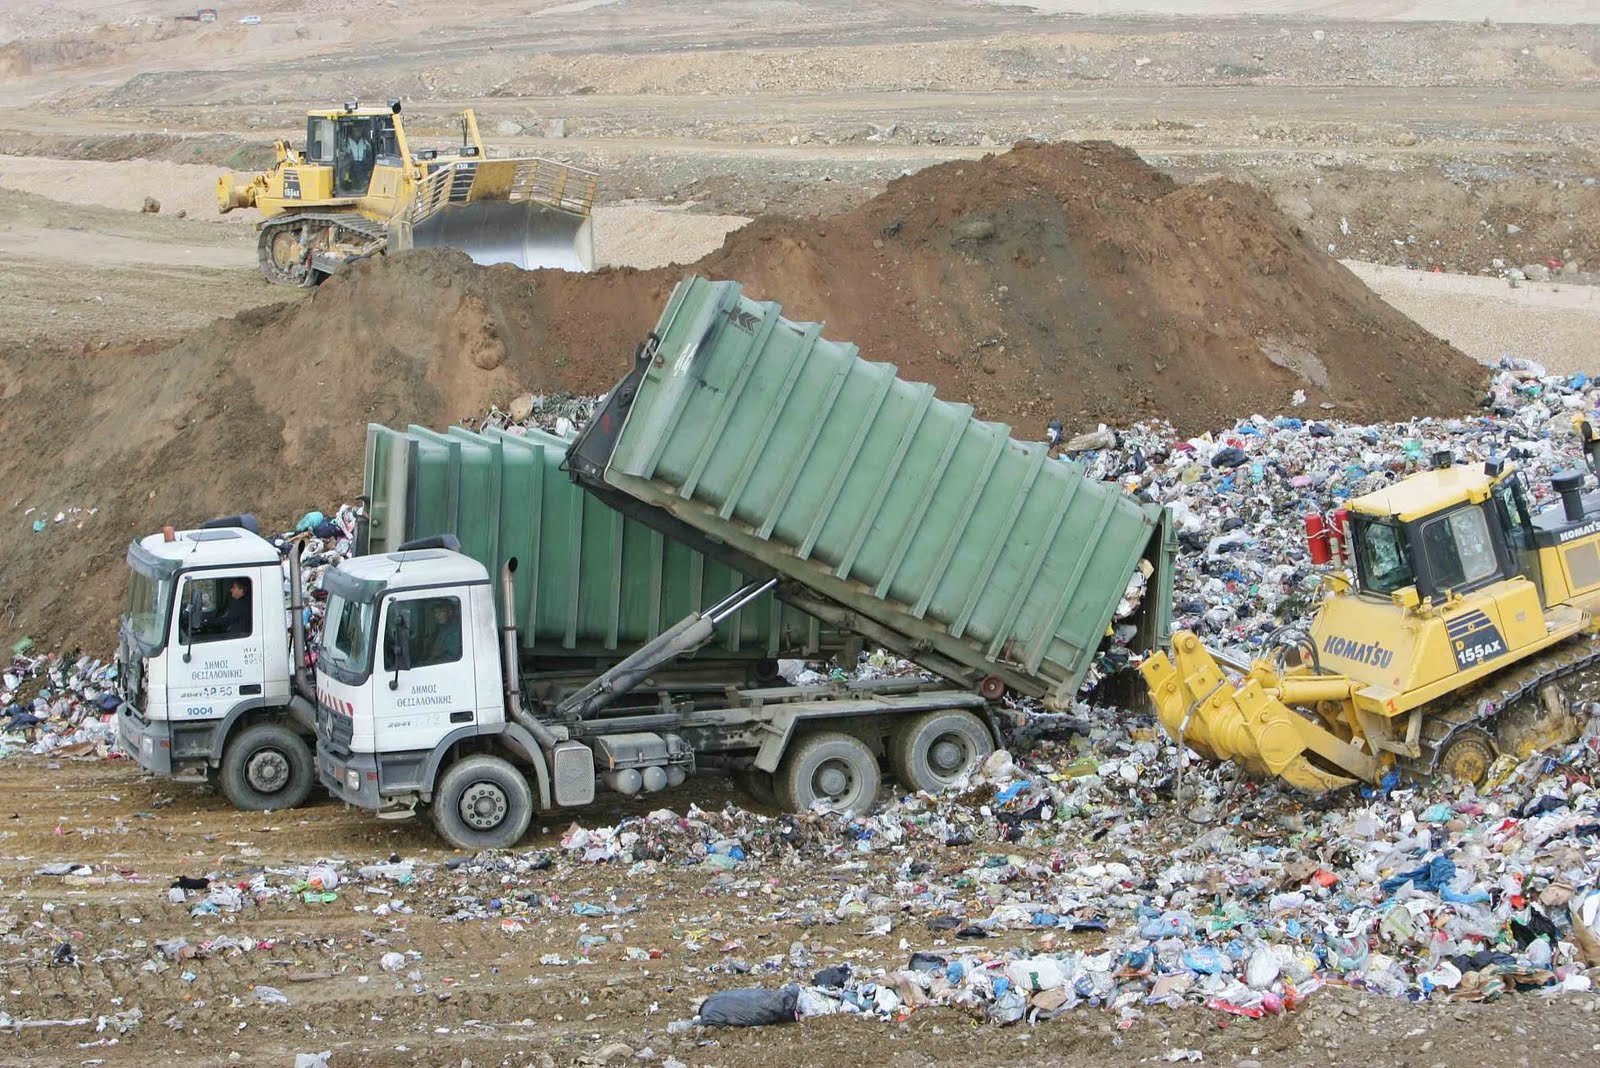 More information about "Προς ομαλοποίηση η αποκομιδή των σκουπιδιών στο λεκανοπέδιο Αττικής"